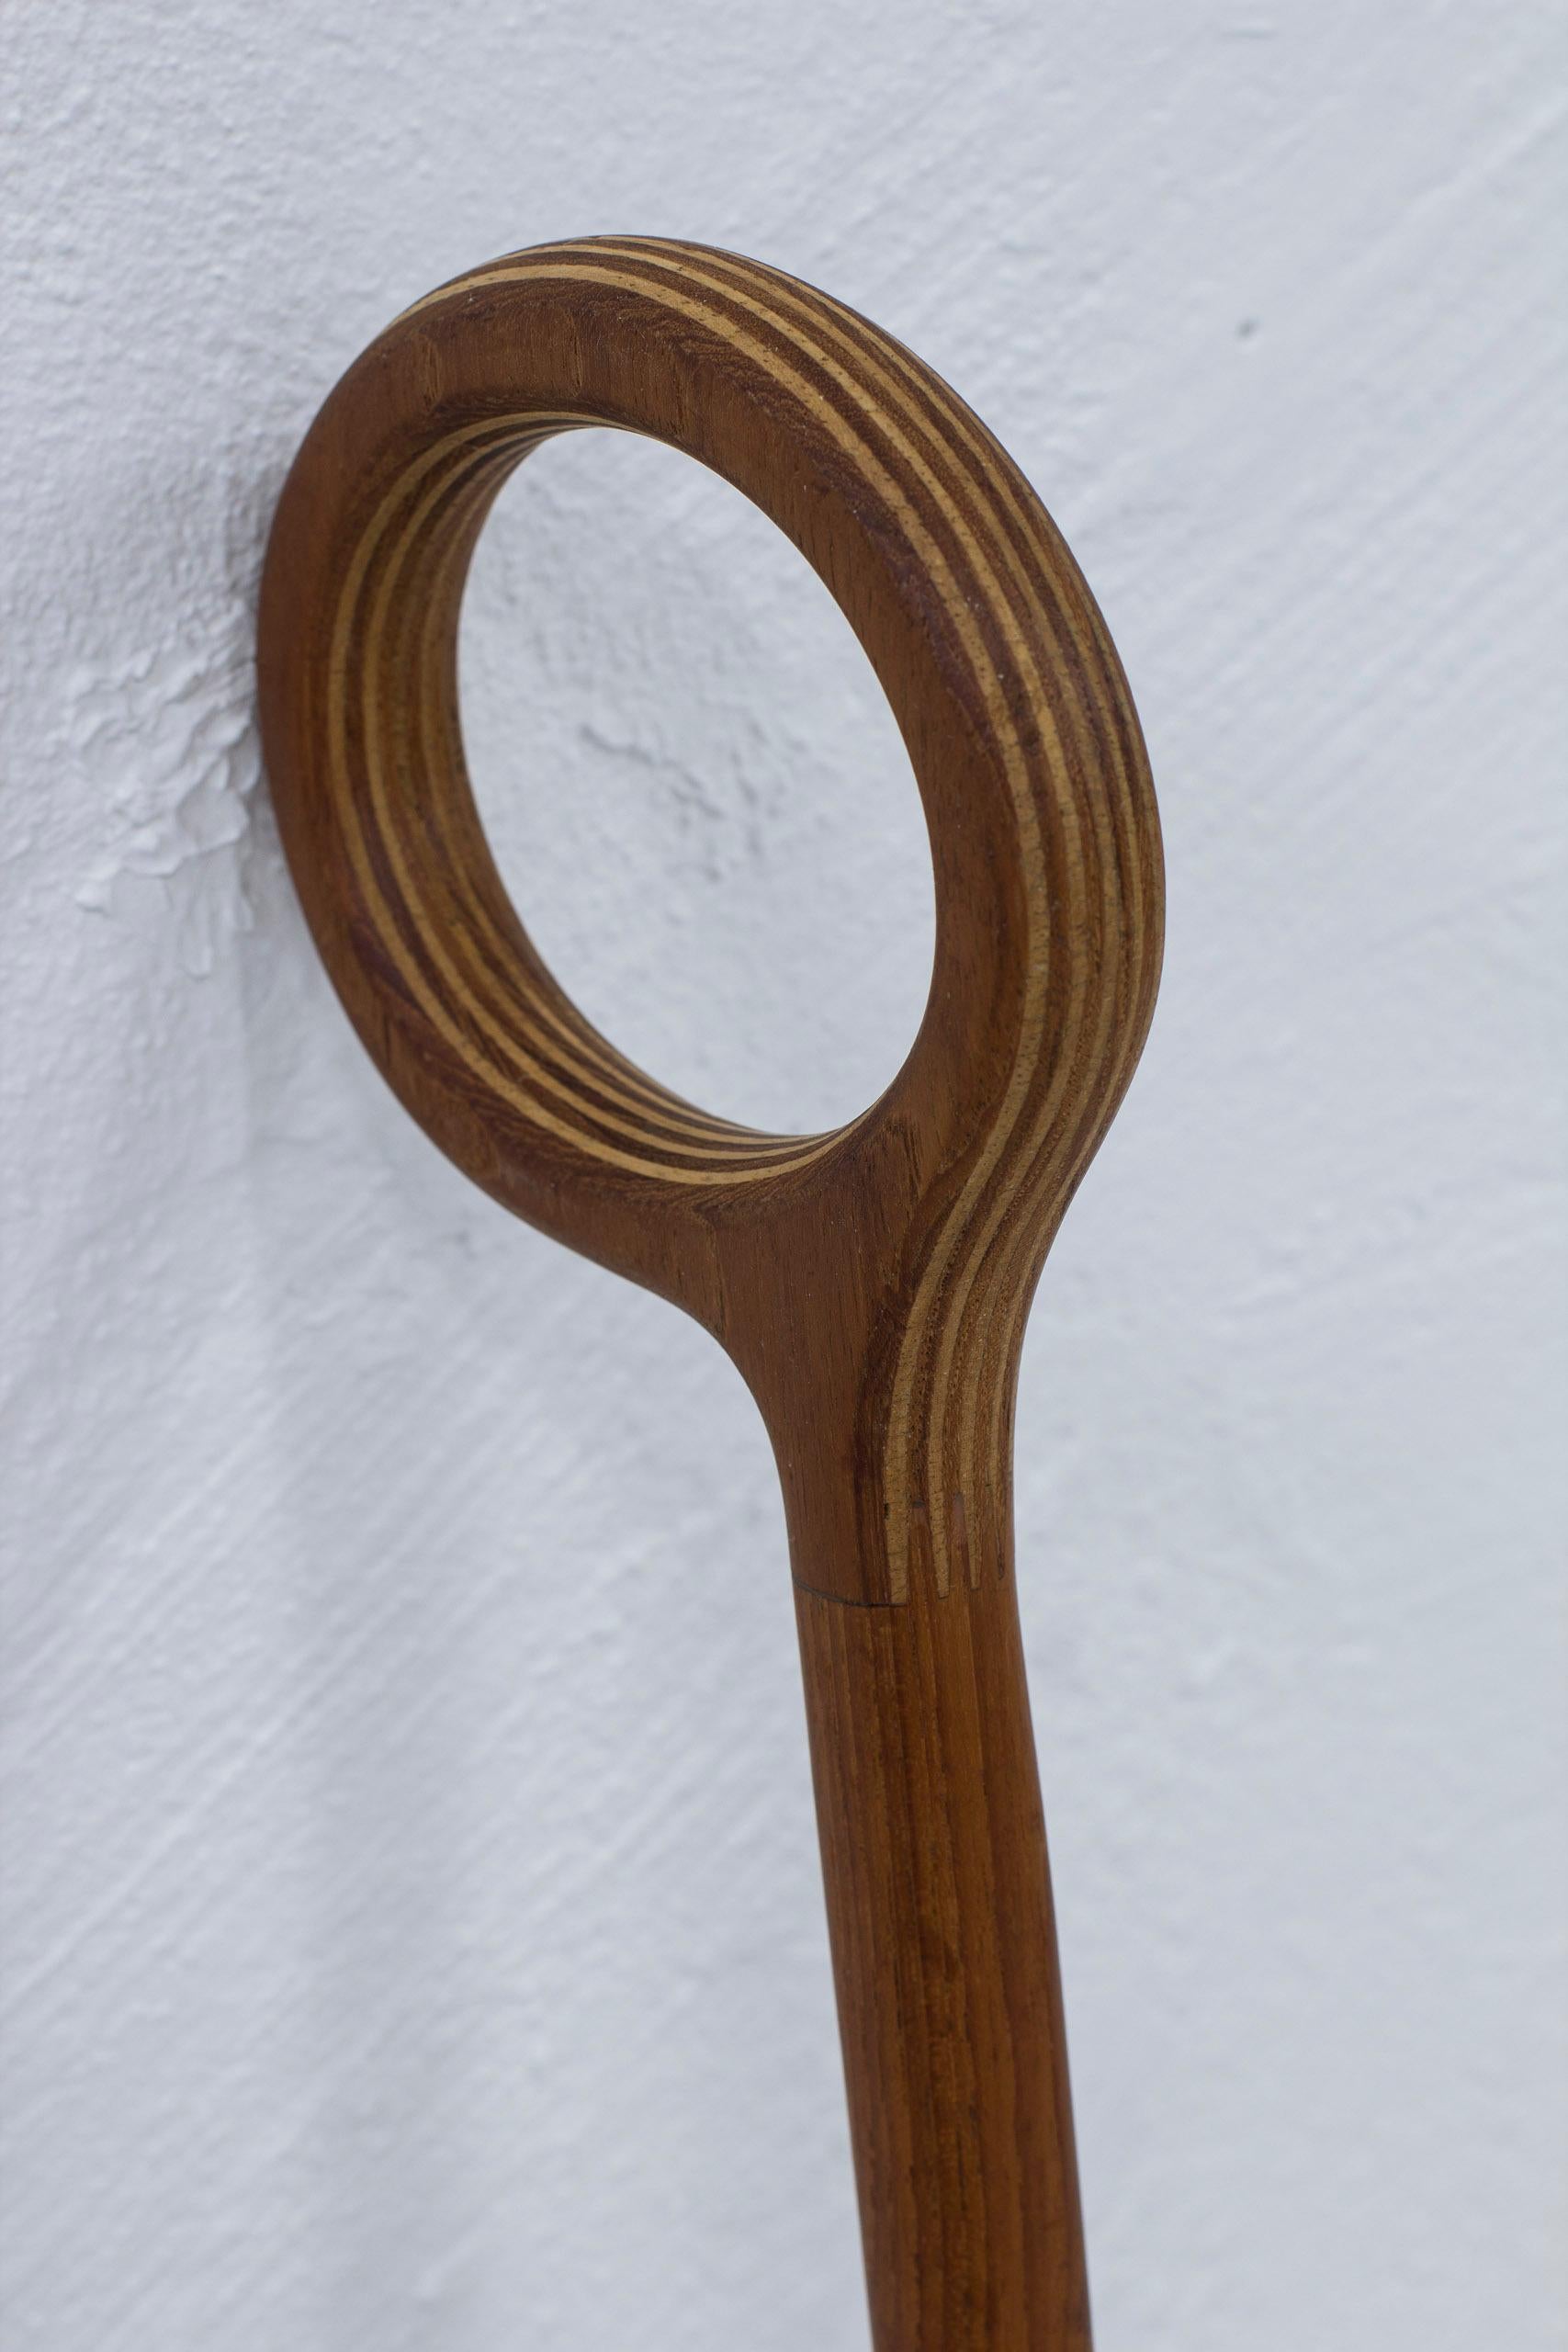 Scandinavian Modern Walking stick/cane in teak an maple by Nanna & Jørgen Ditzel, Denmark, 1950s For Sale